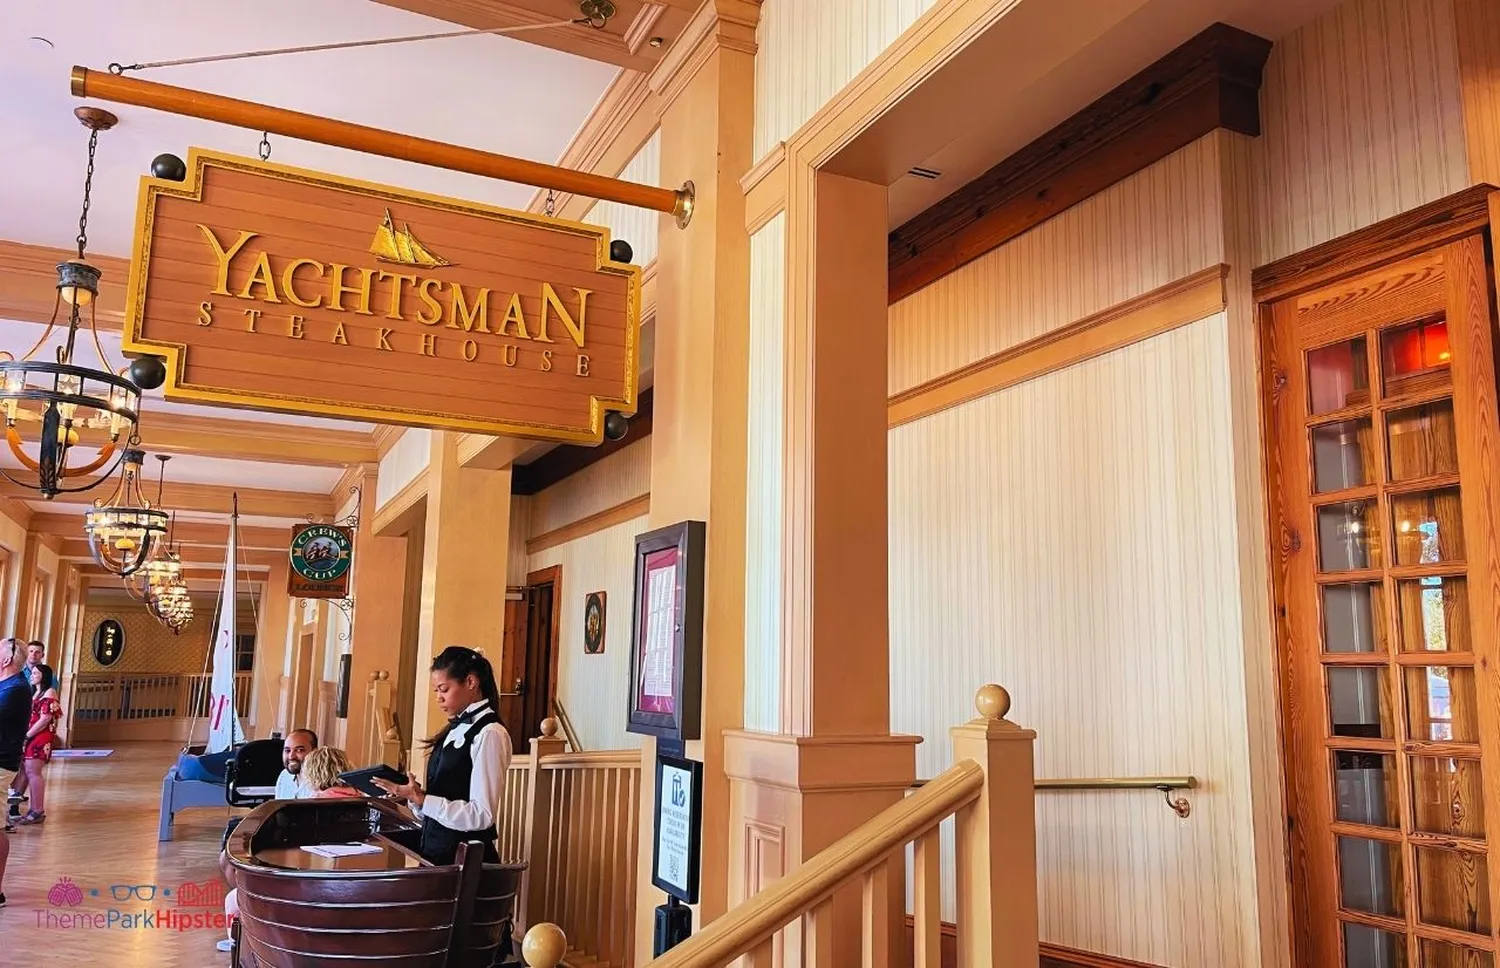 Yachtsman restaurant Orlando